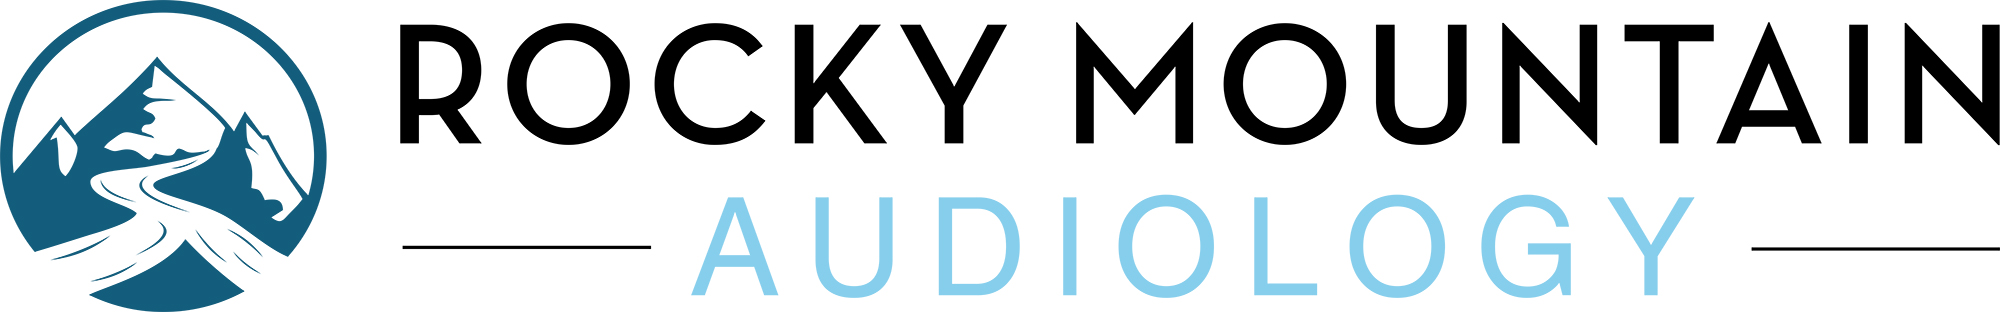 Rocky Mountain Audiology logo